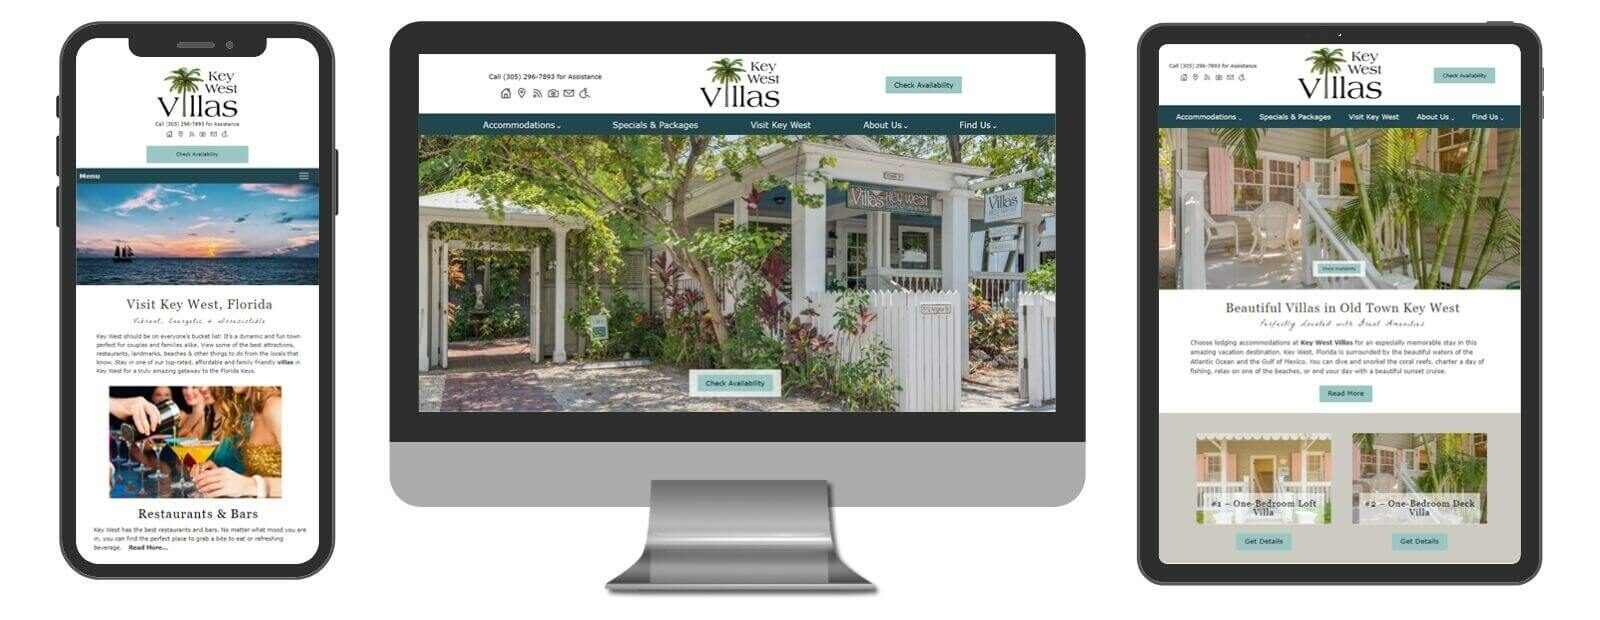 Key West Villas website displayed in 3 sizes - mobile, template and desktop